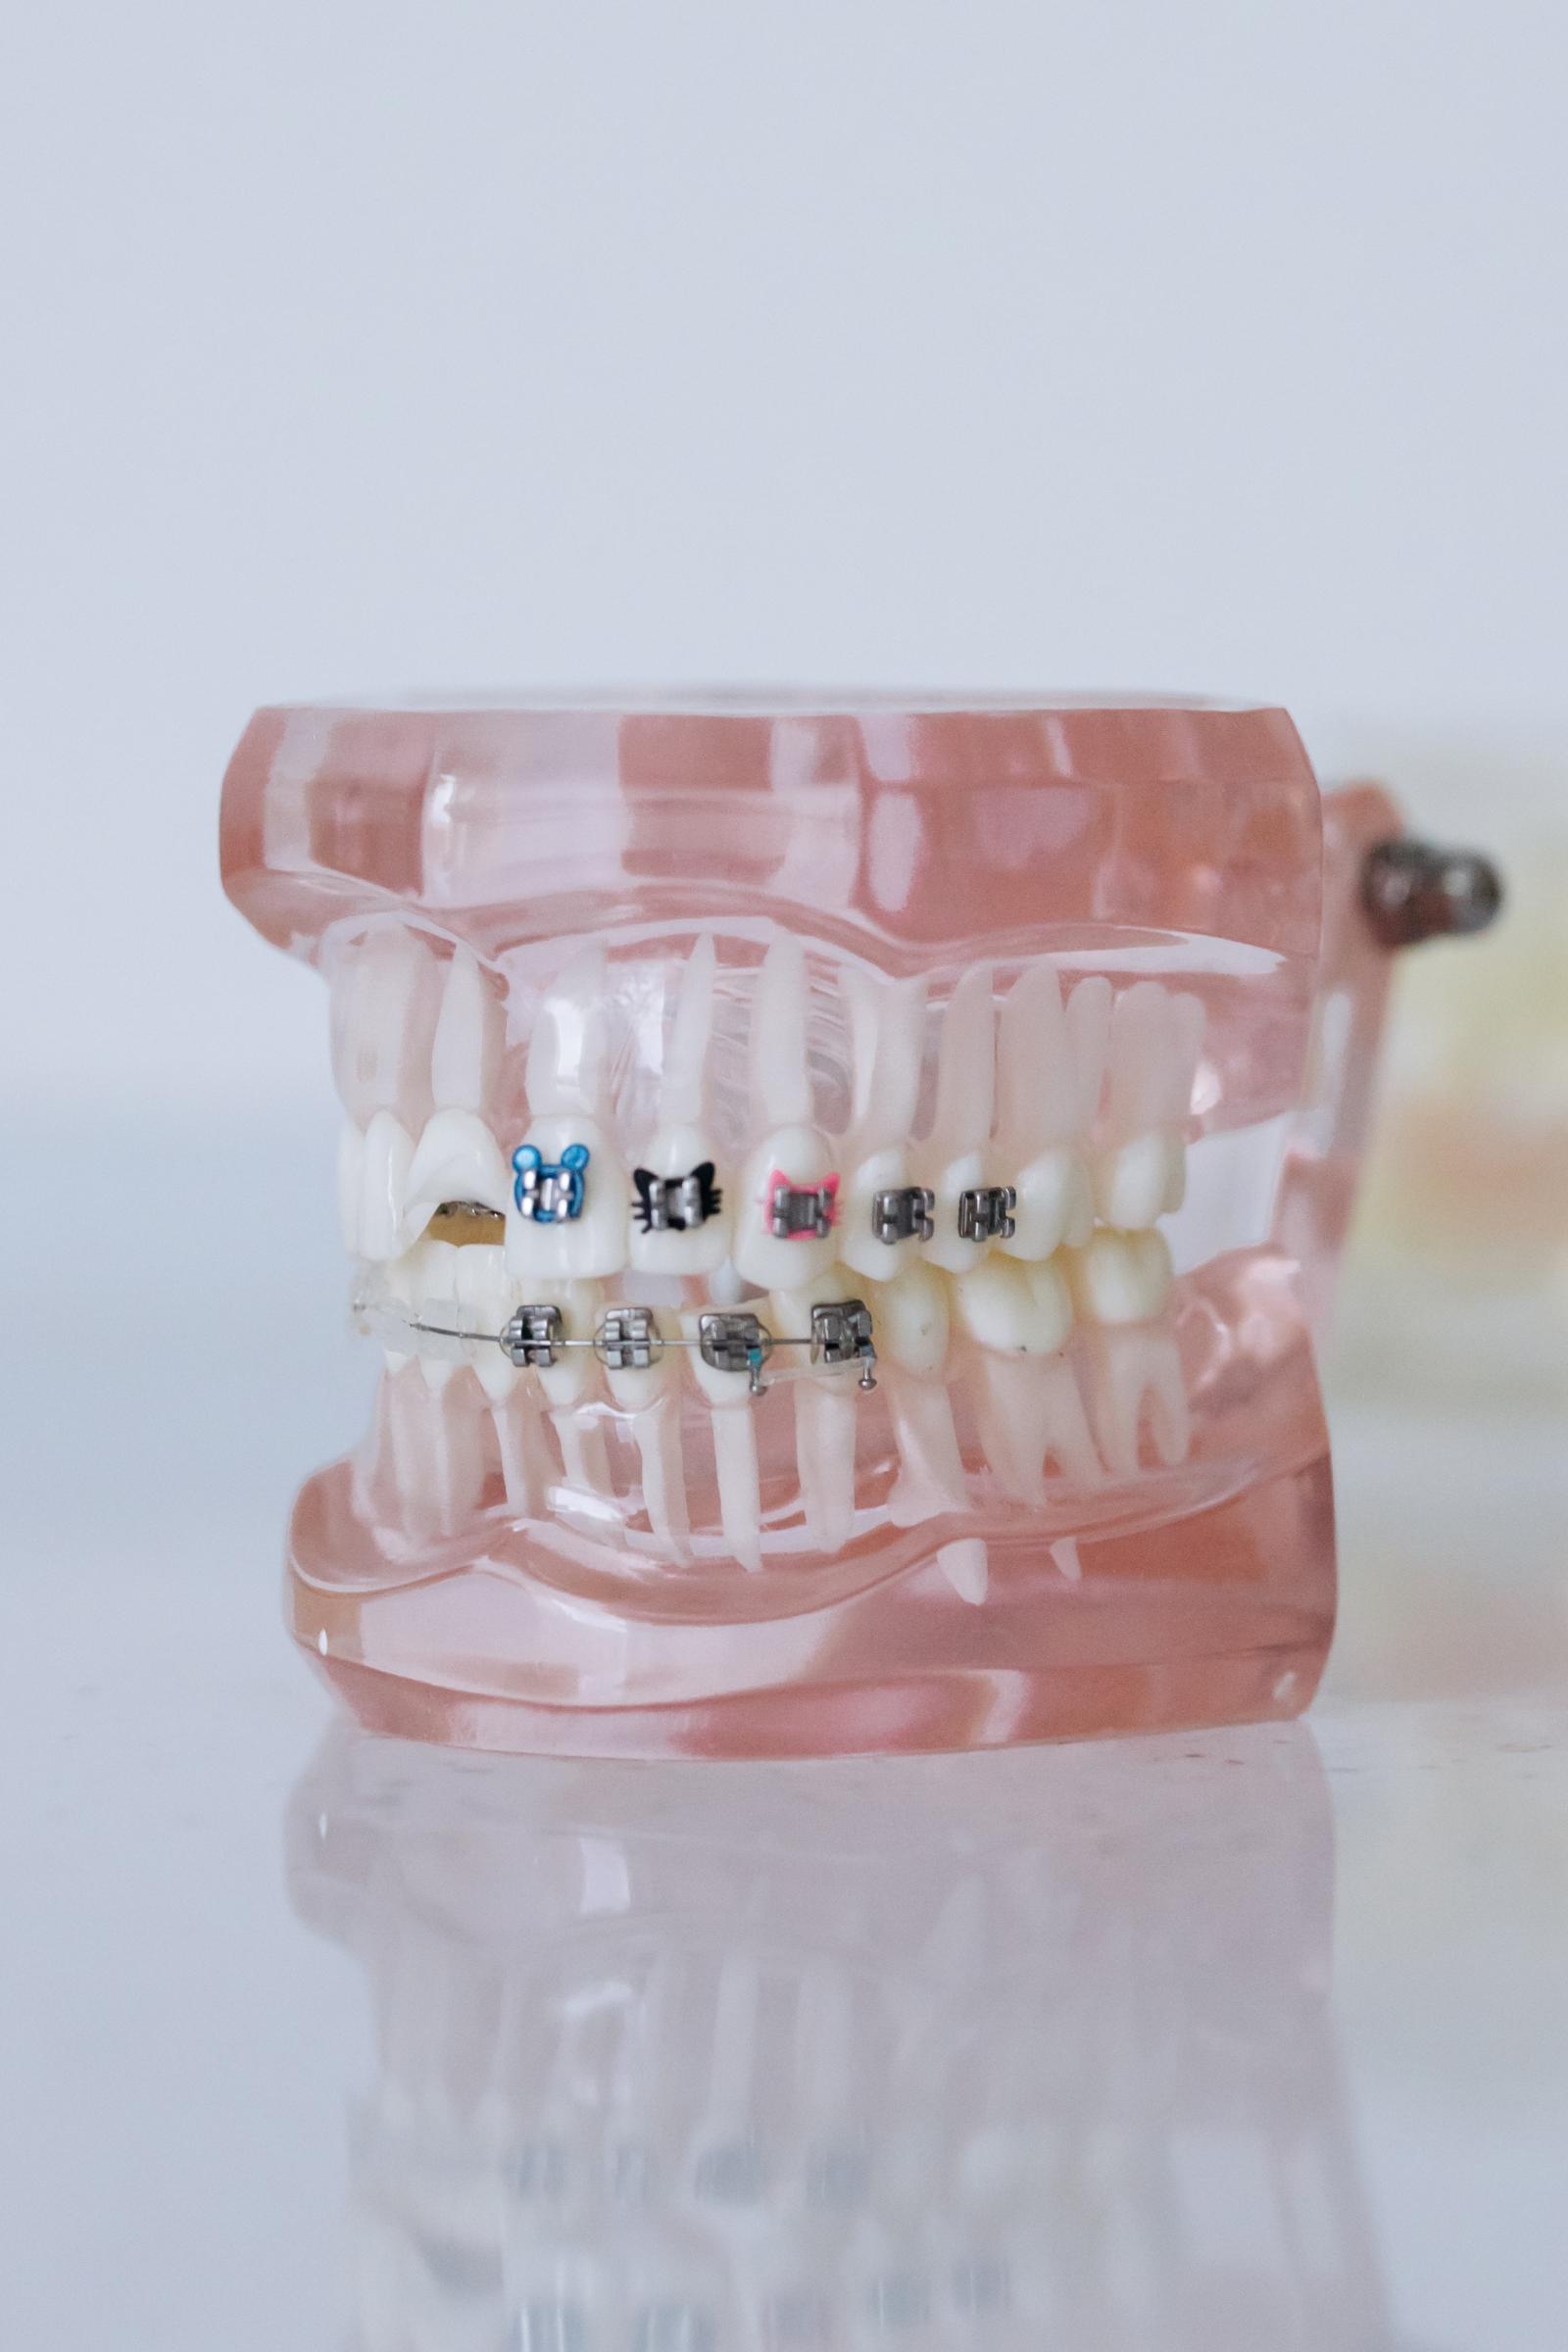 Straight Teeth & Invisalign. Chandler Cosmetic Dentist